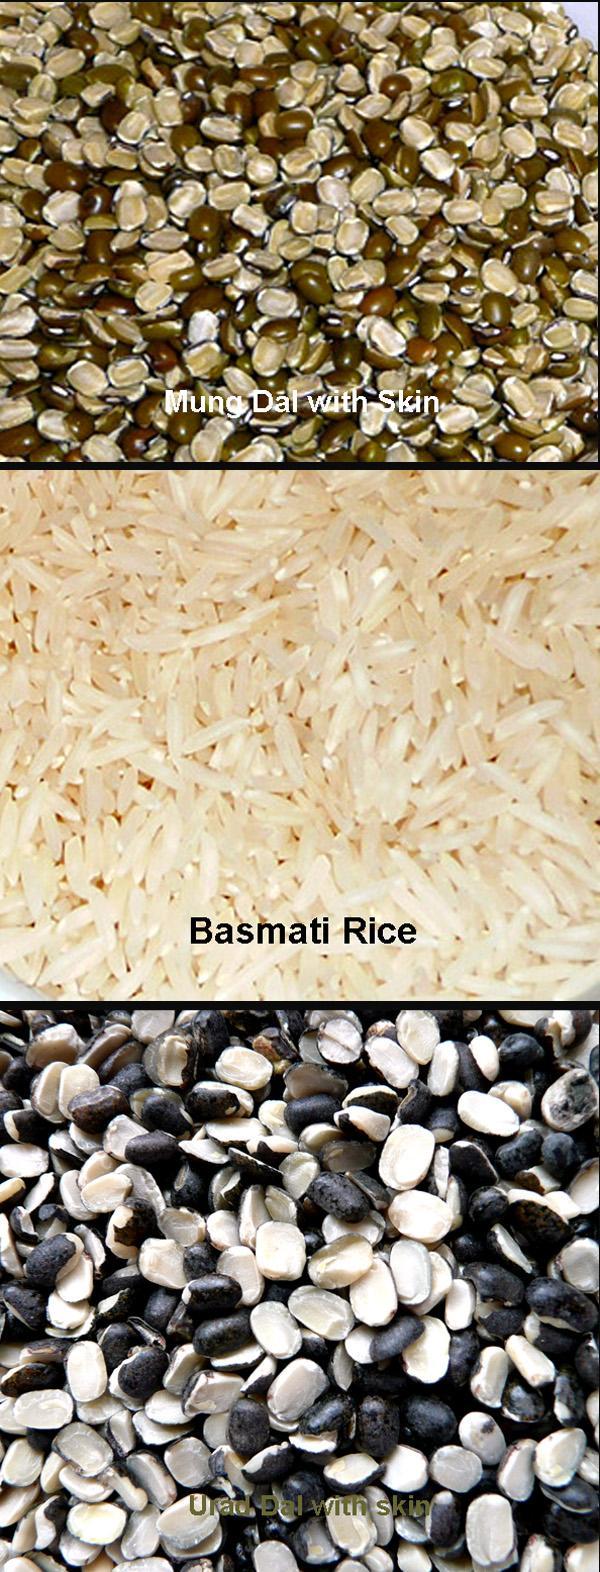 Khitcheri, A Mung or Urad Dal and Rice Mix